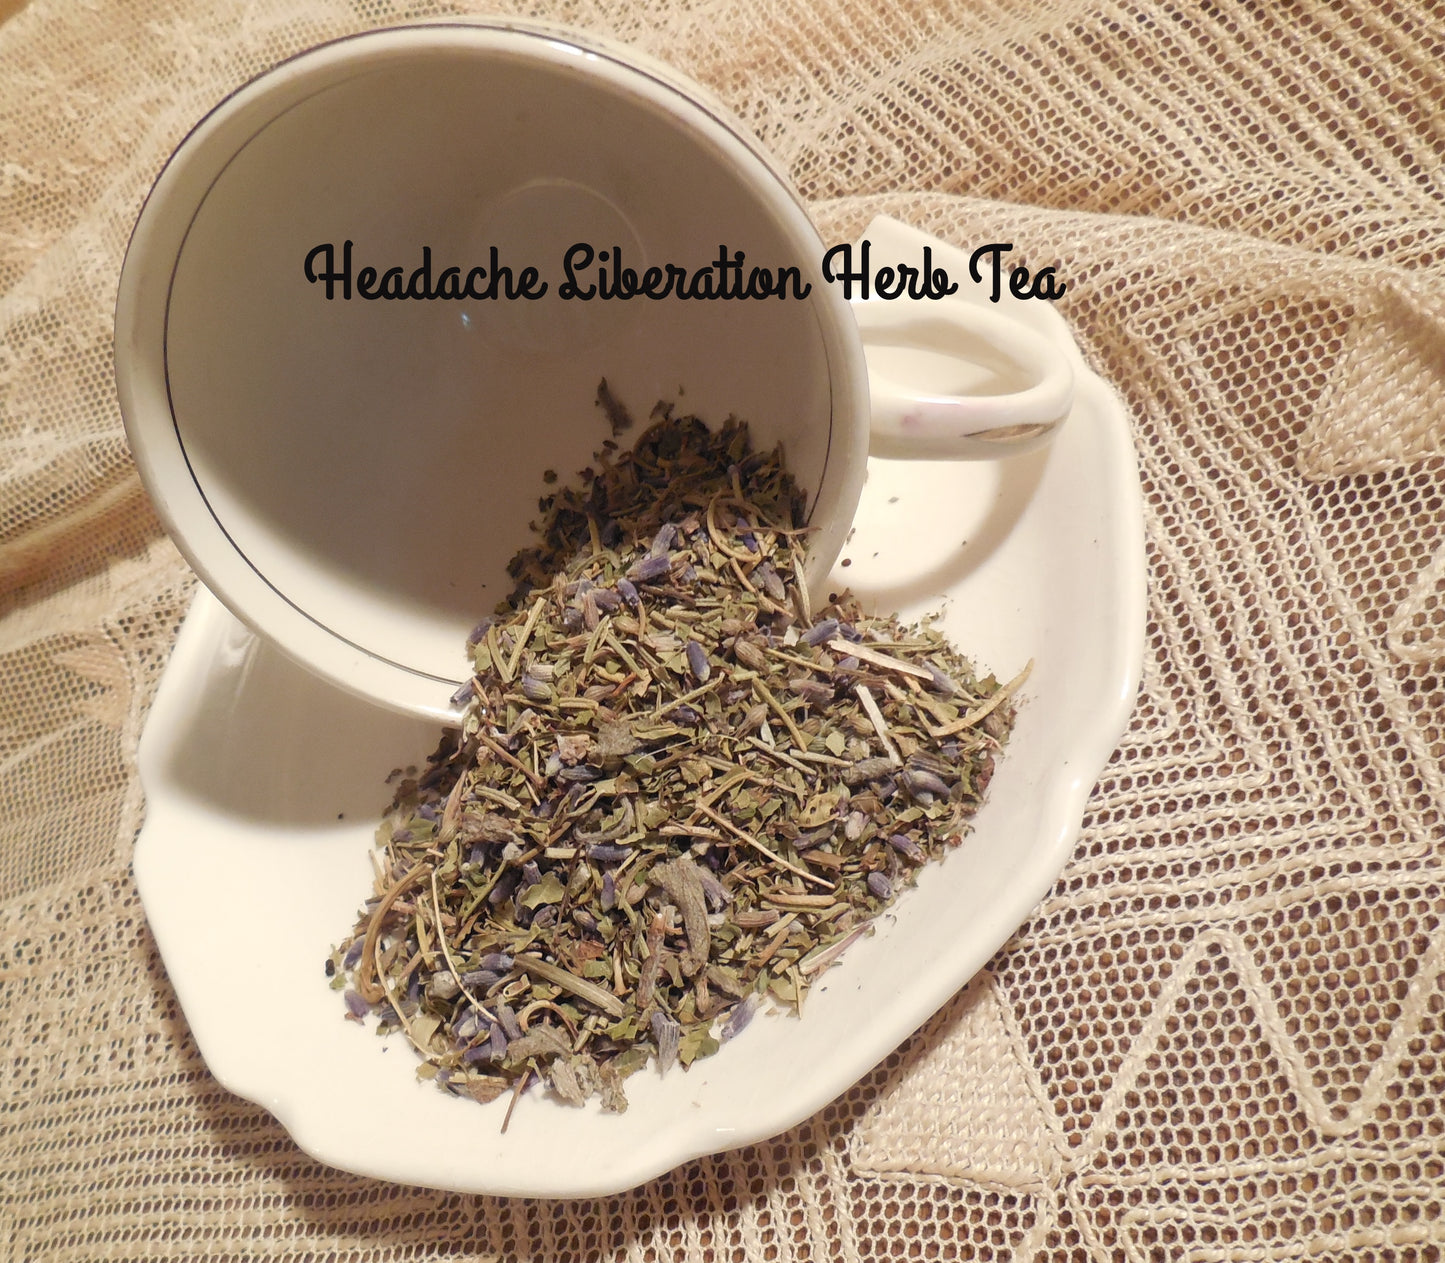 Headache Liberation Loose Herbal Tea, meticulously crafted, organic 100% herb tea